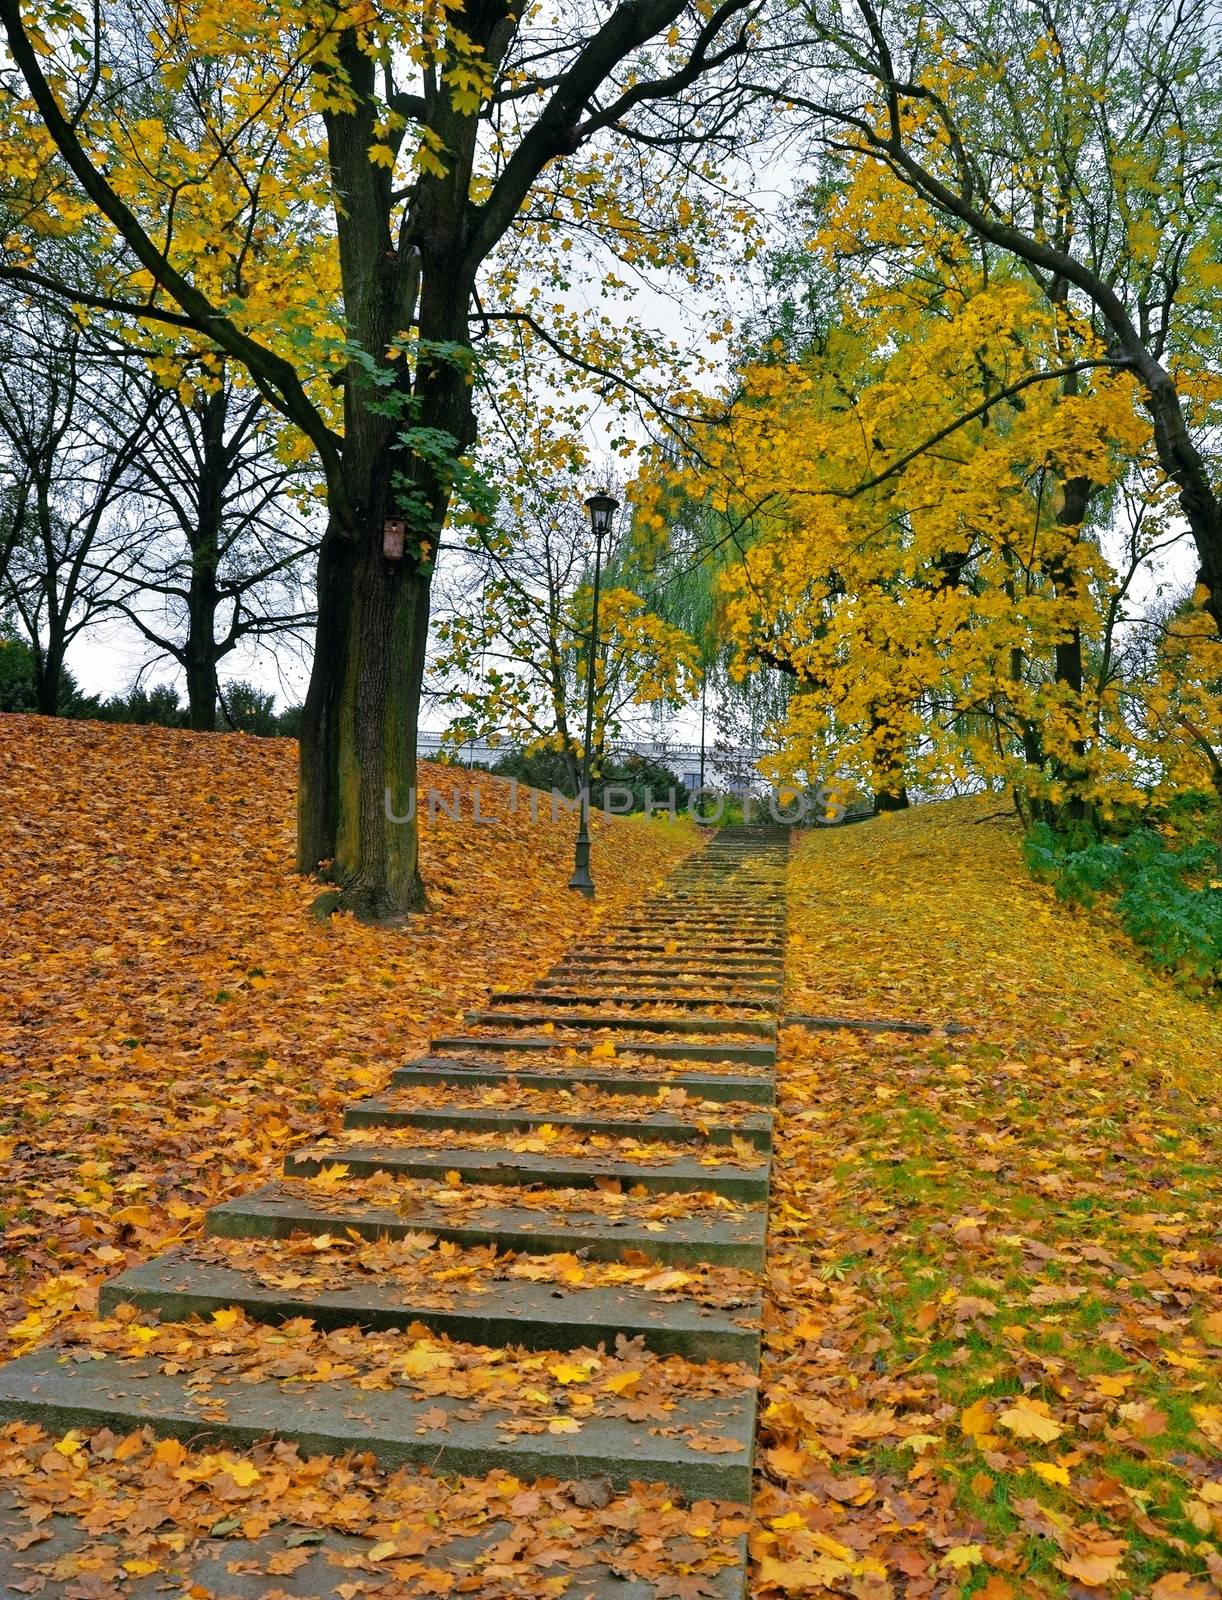 Stairs in autumn by Vectorex